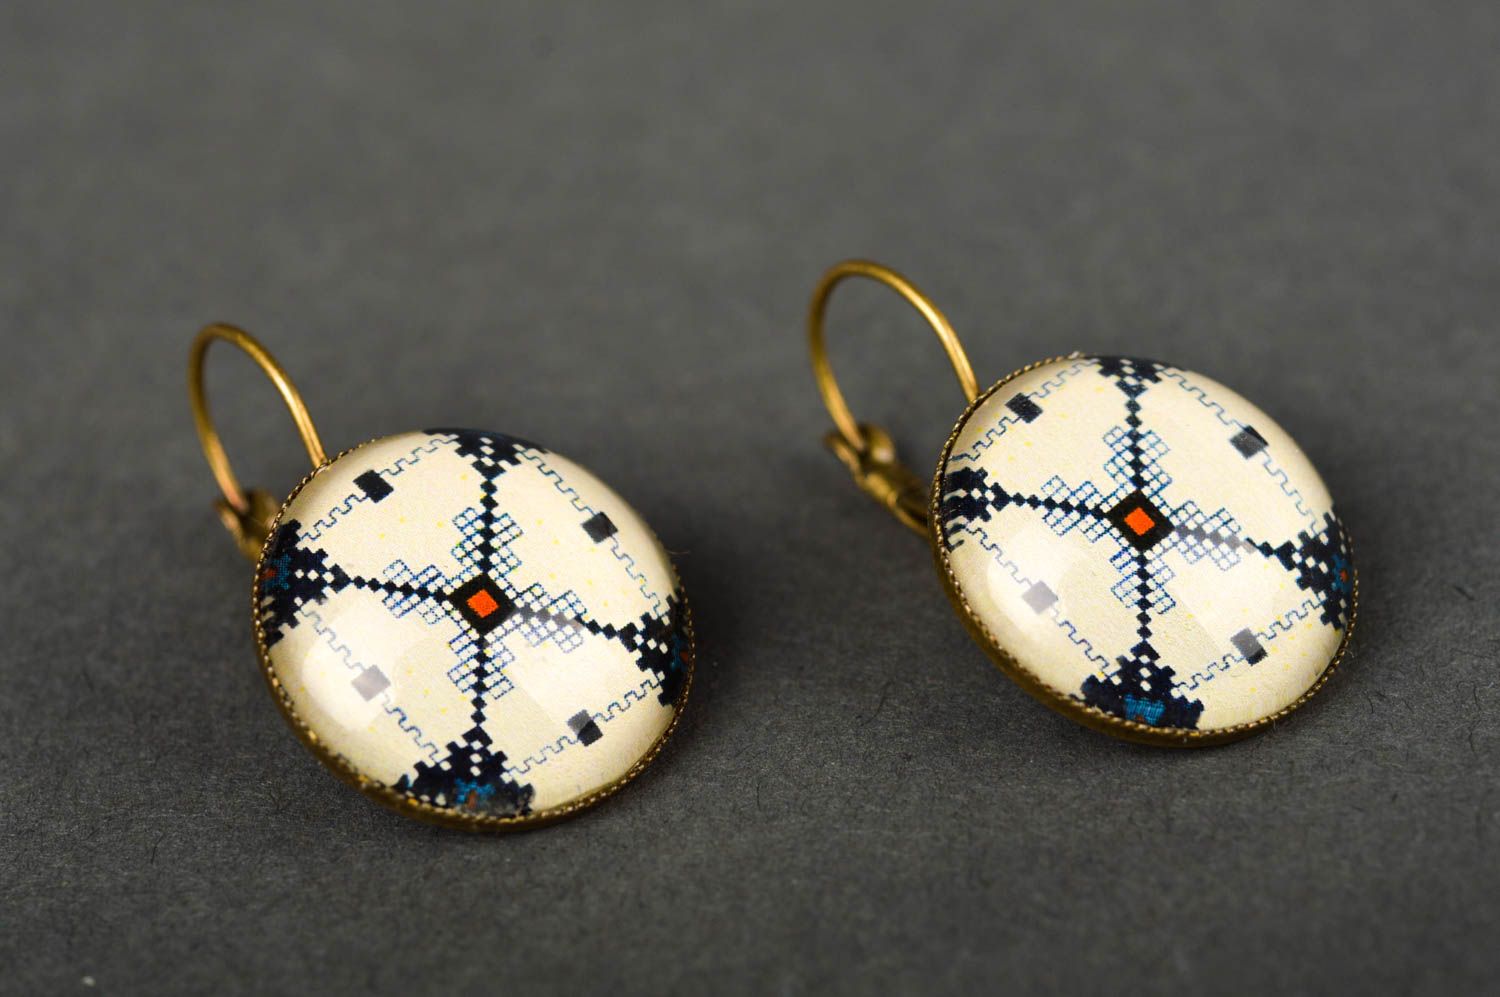 Vintage earrings handmade round-shaped earrings fashion jewelry stylish jewelry photo 2